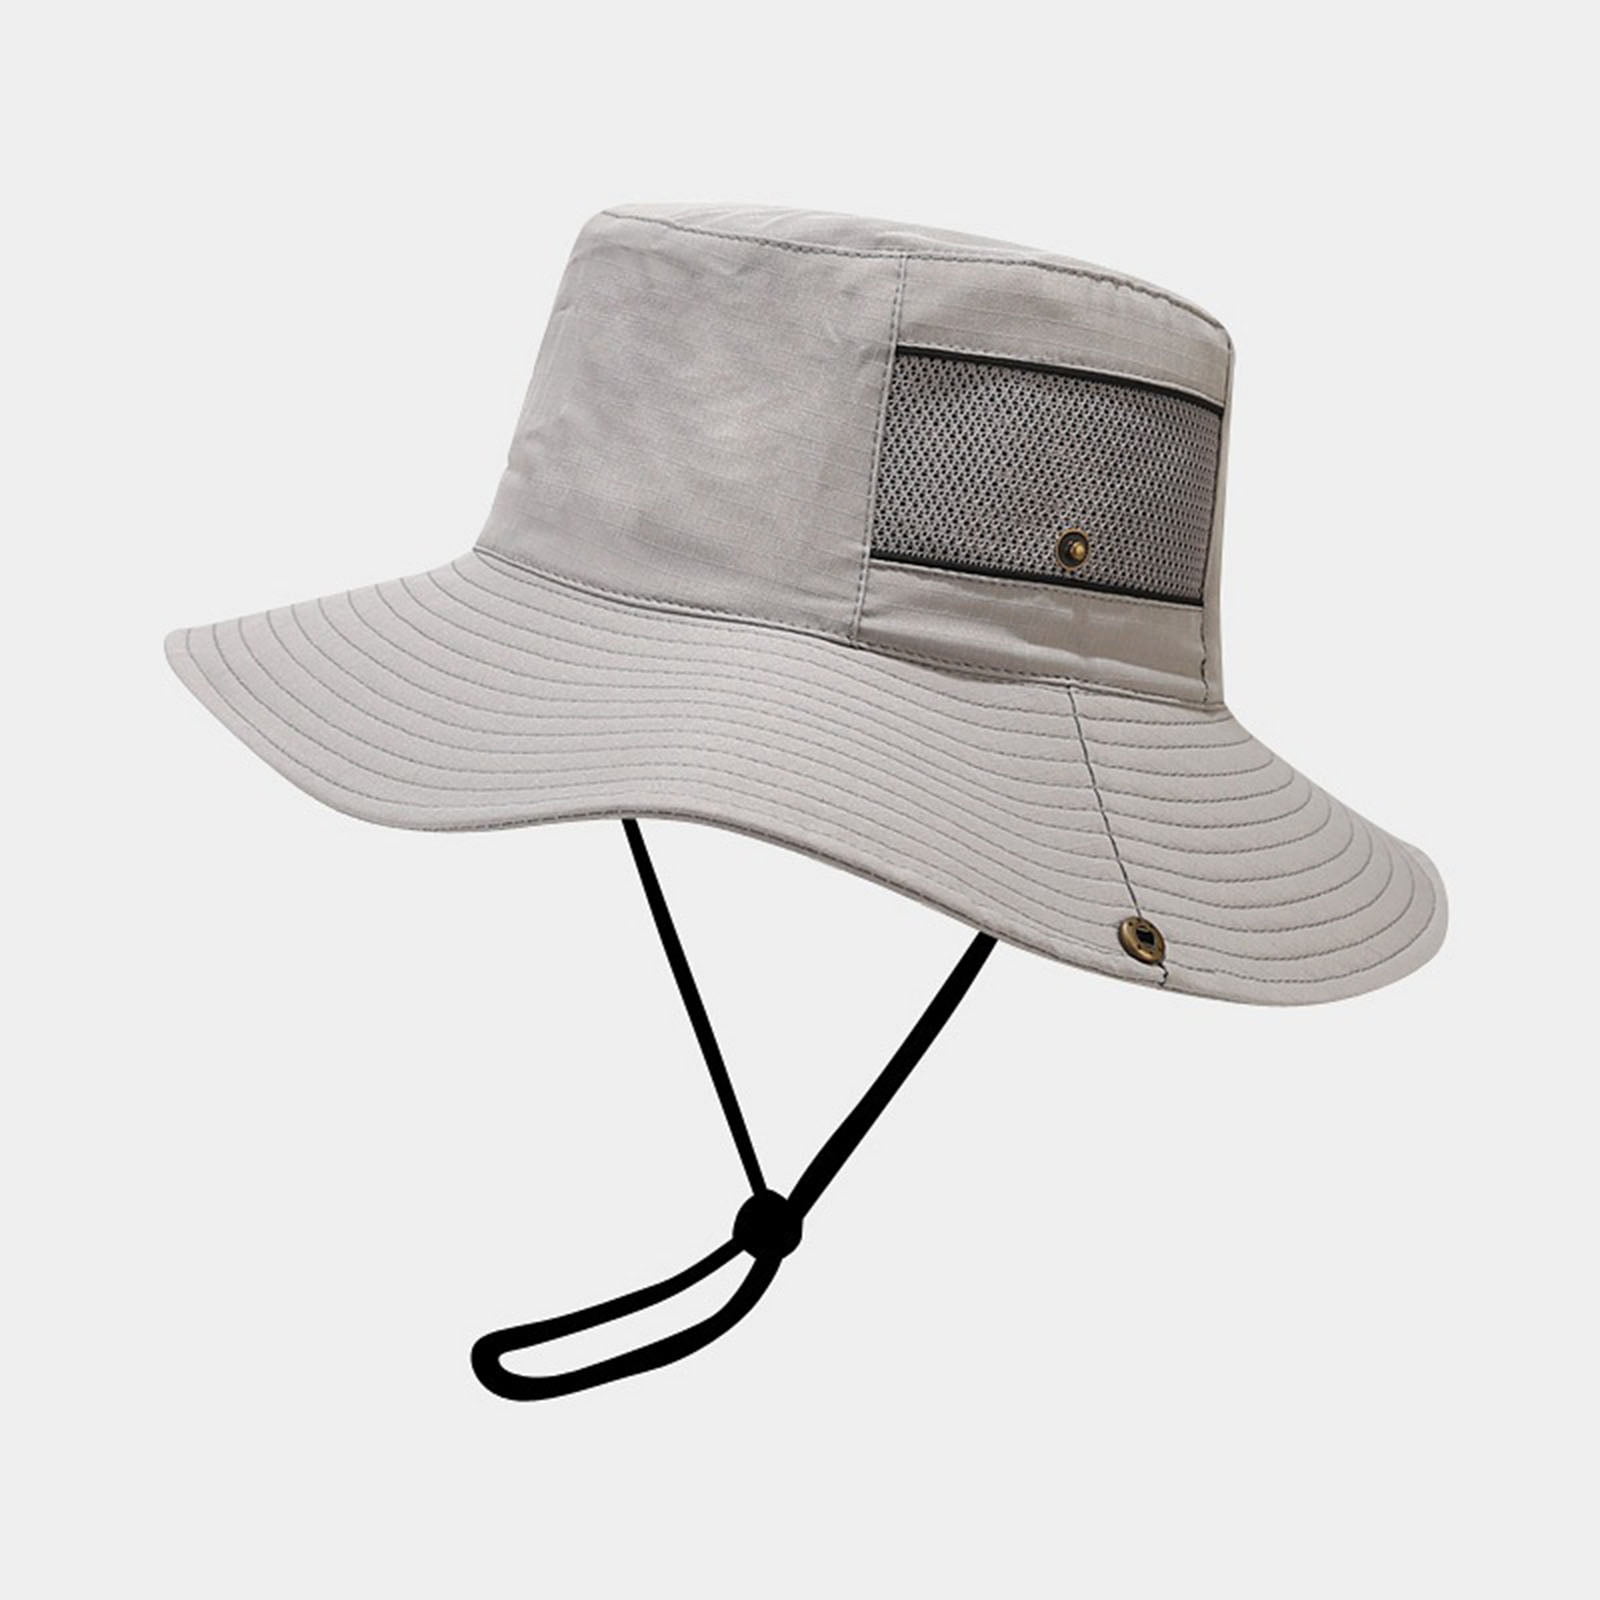 Bush Hat Men's Sun Hat 61 Breathable Wide Brim Boonie Hat